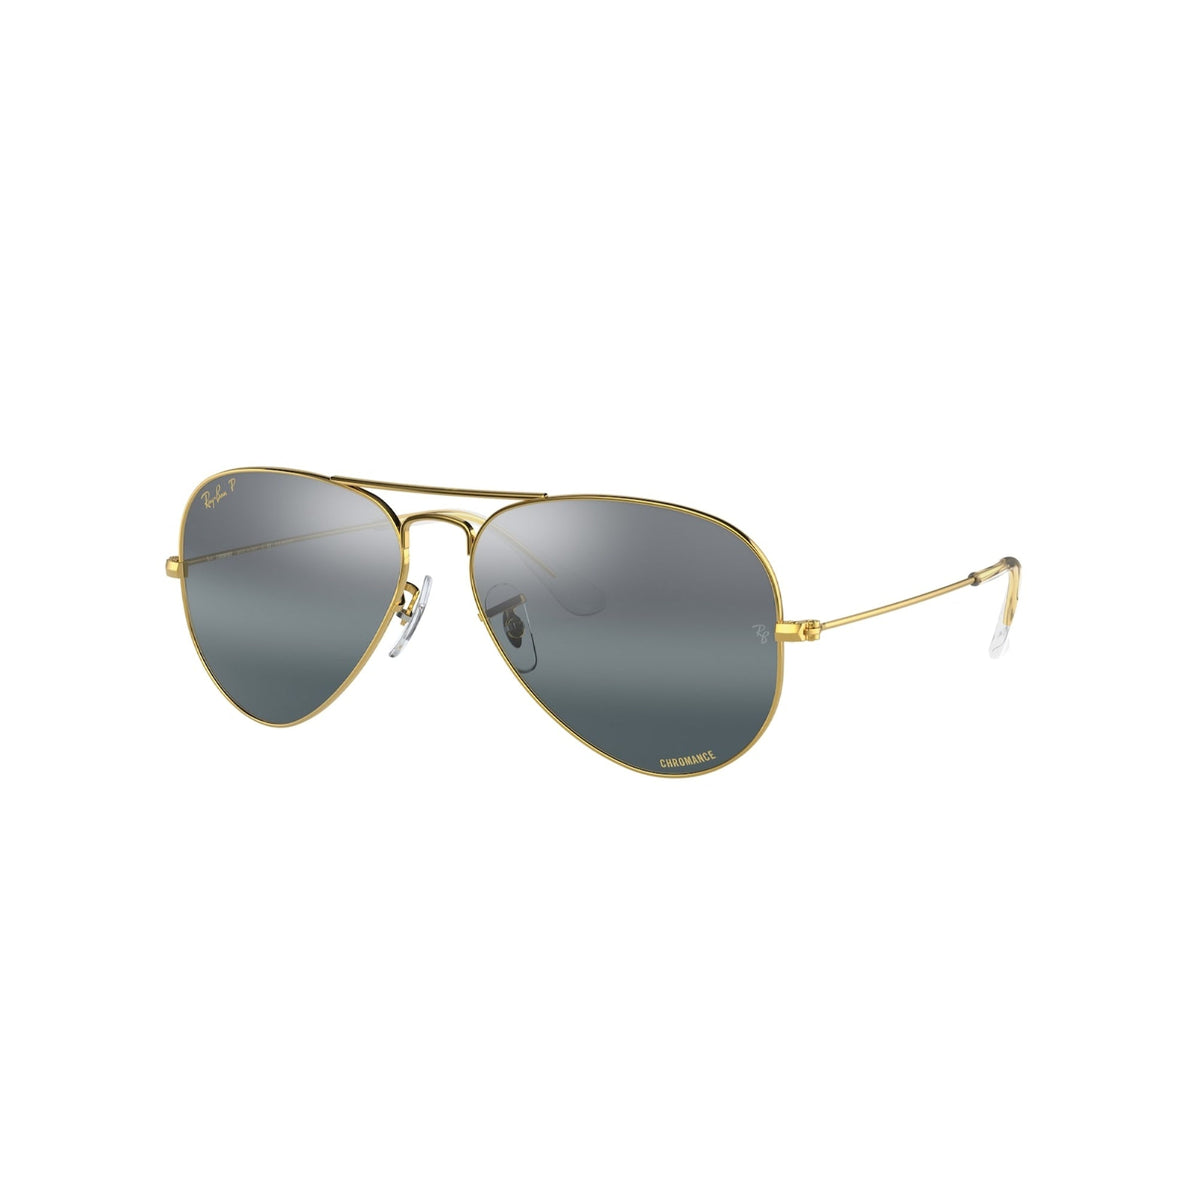 Ray-Ban Unisex Sunglasses Aviator large Metal Gold Polar Clear Gradient Dark Blue Metal Metal  0RB3025 9196G6 58